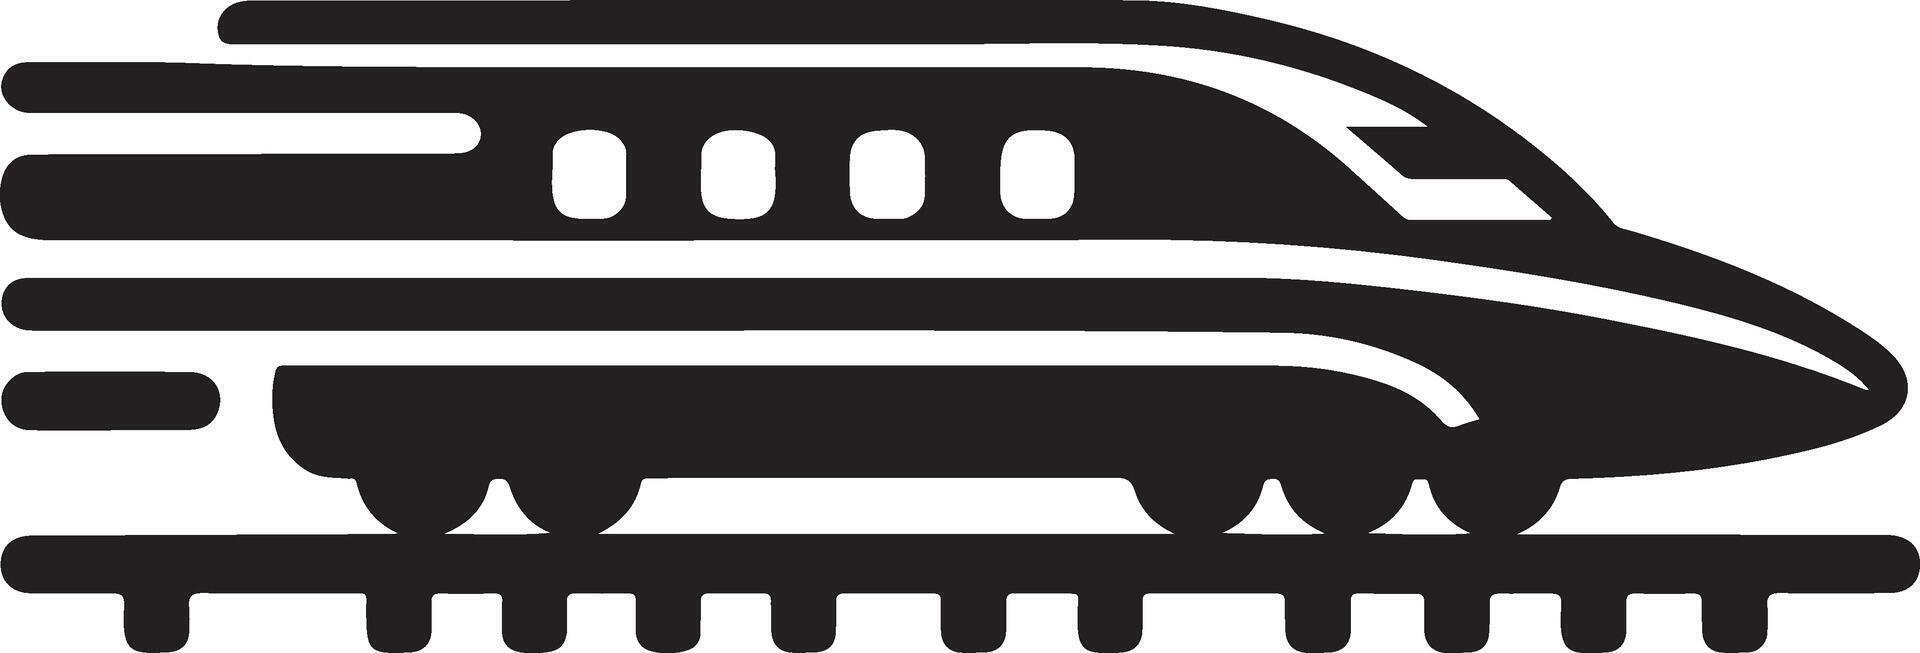 minimal japaner kula tåg ikon vektor ClipArt silhuett, vit bakgrund 18